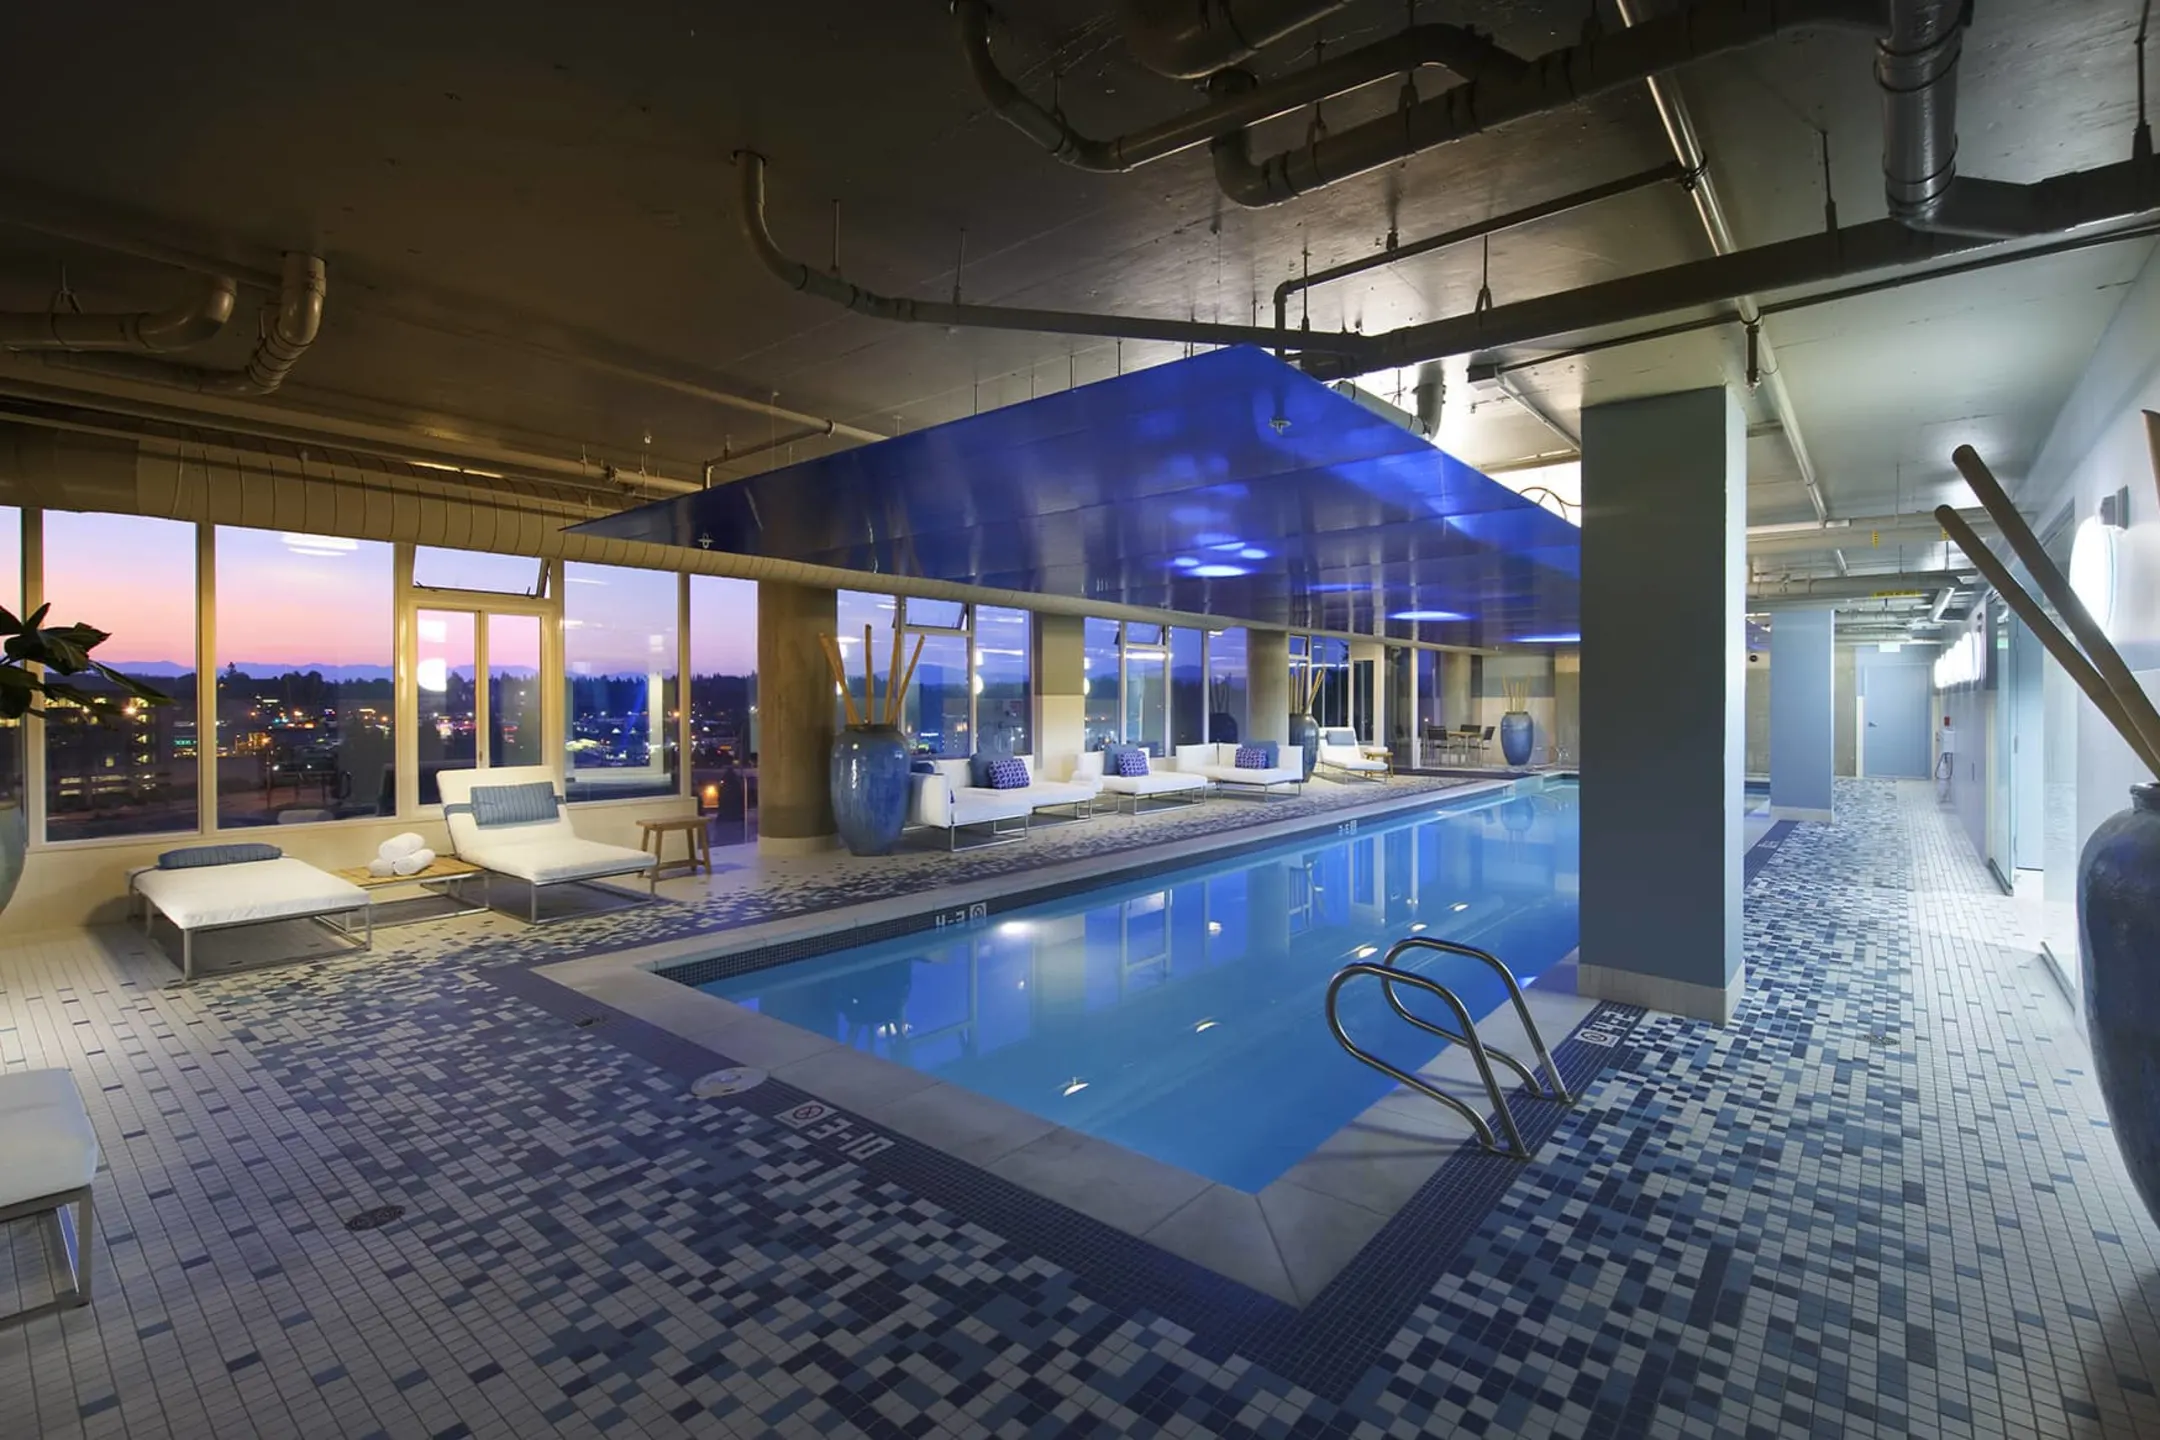 Pool - Elements Apartments - Bellevue, WA